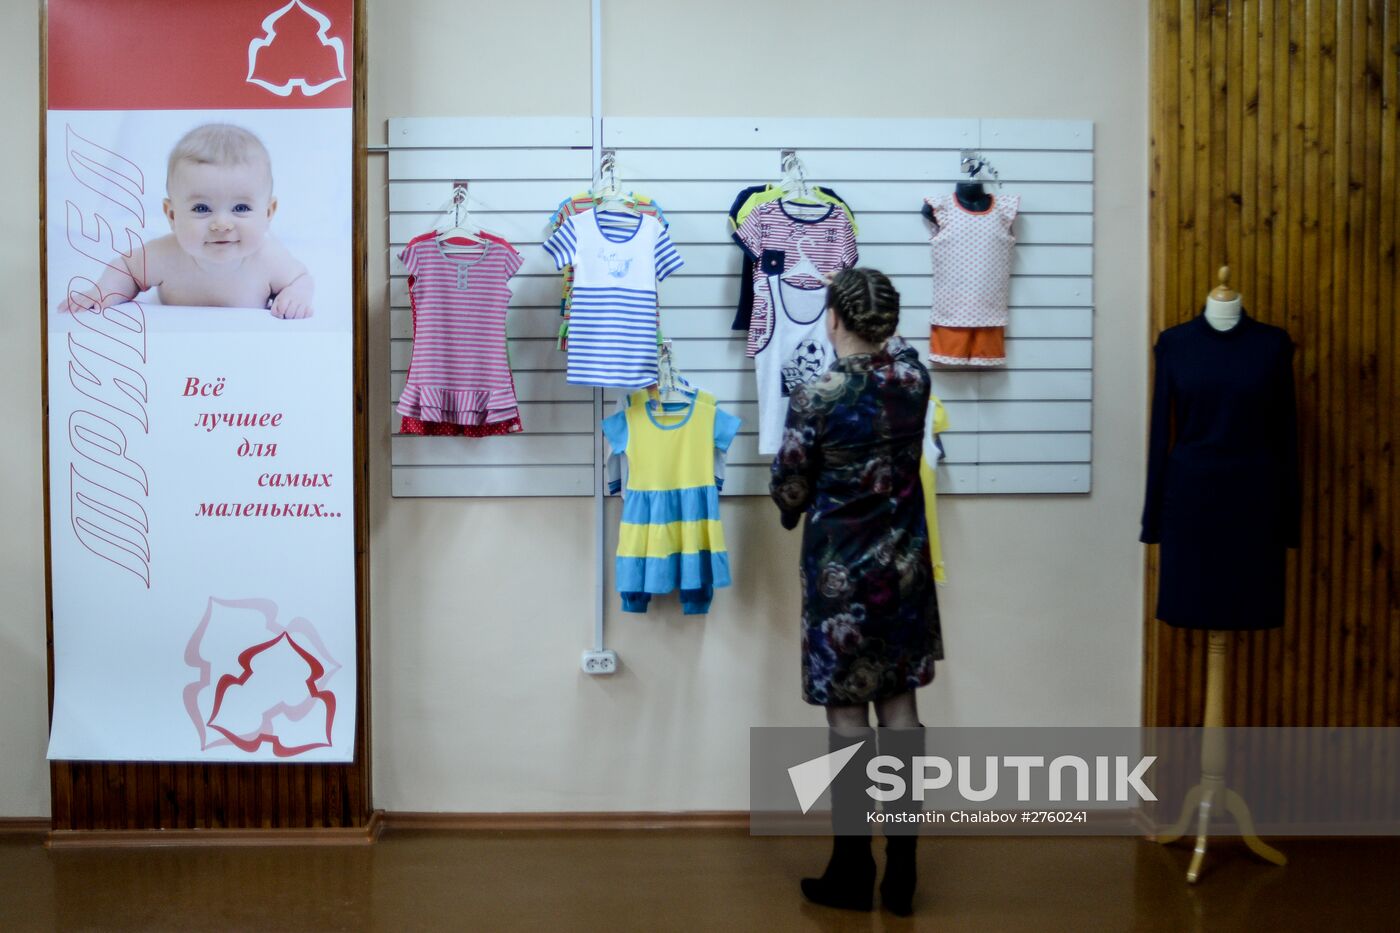 Velikiye Luki Knitting Factory Trivel has been awarded Russian Quality Mark